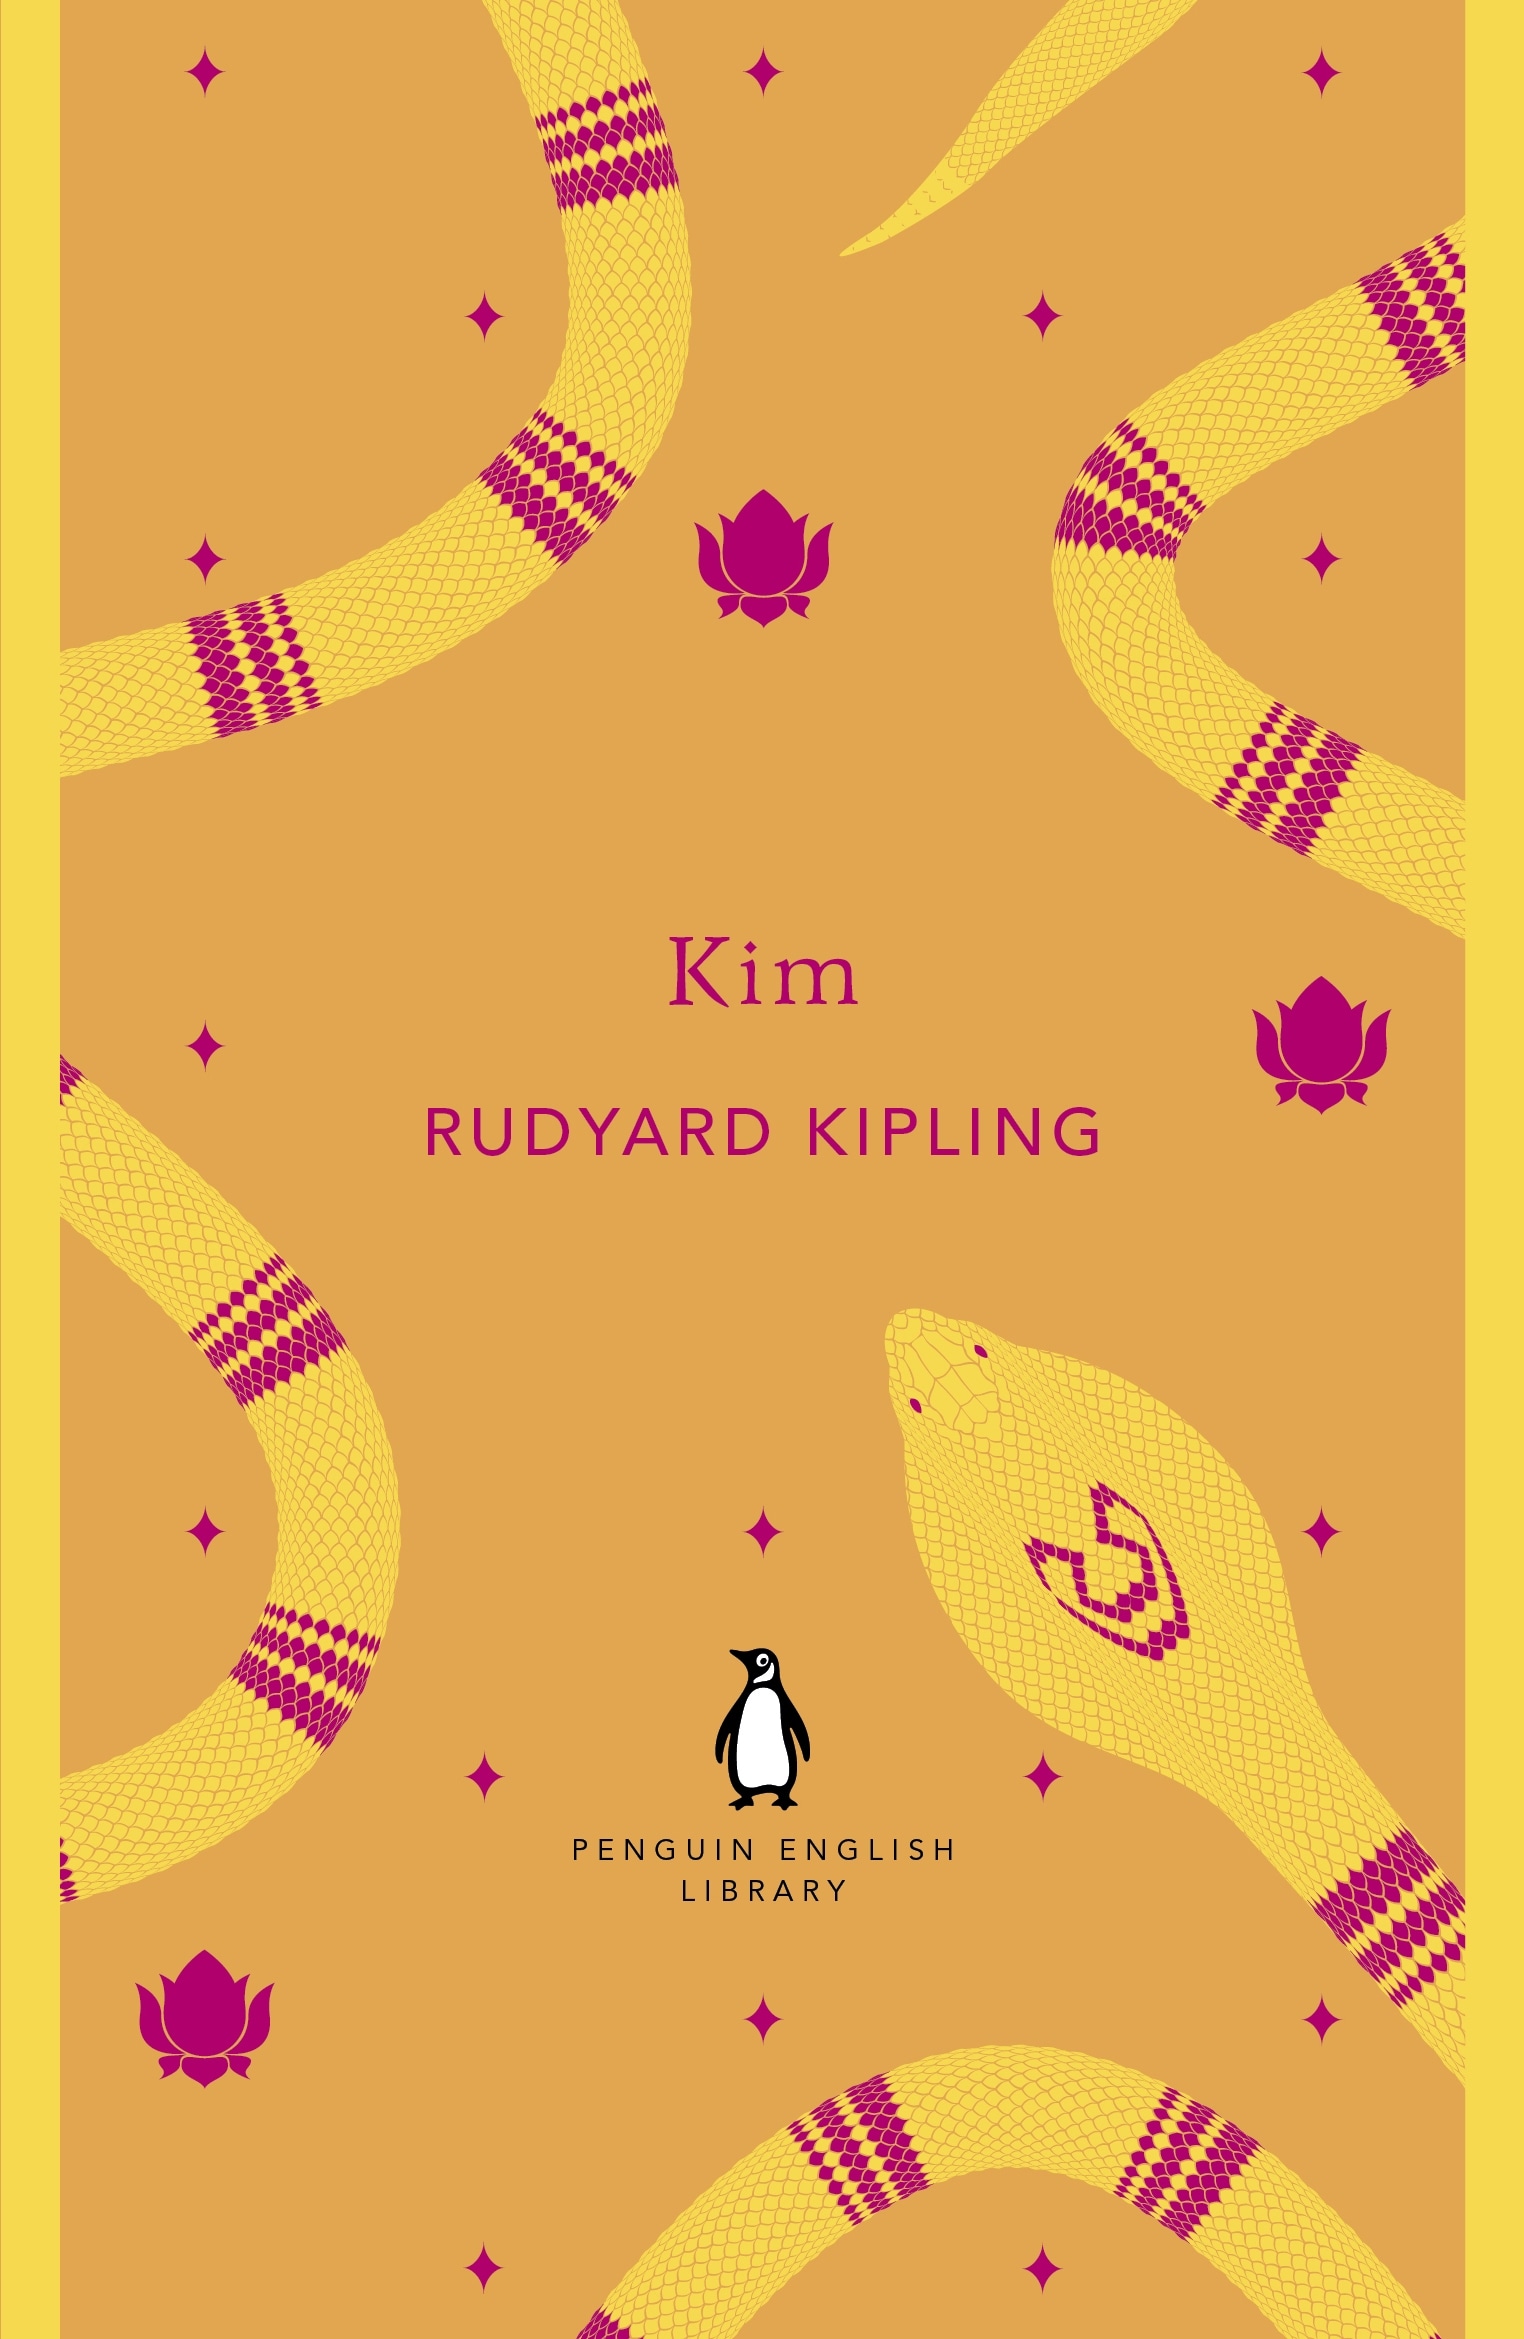 Book “Kim” by Rudyard Kipling — October 25, 2012